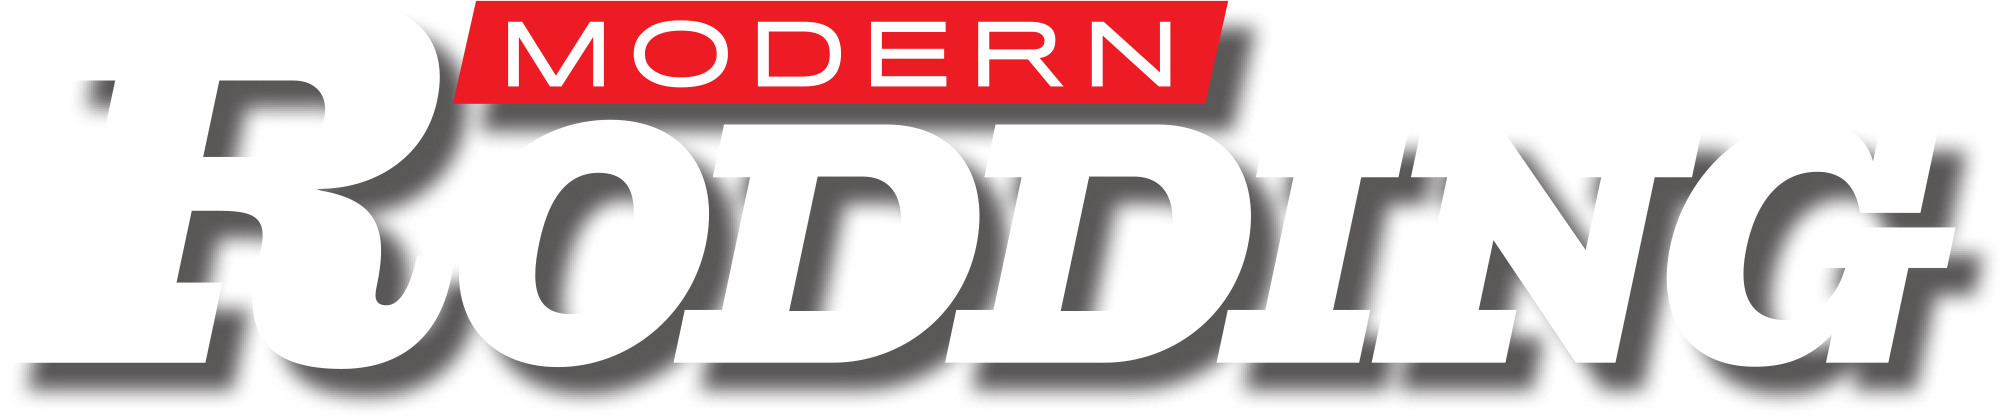 Modern Rodding logo with dropshadow